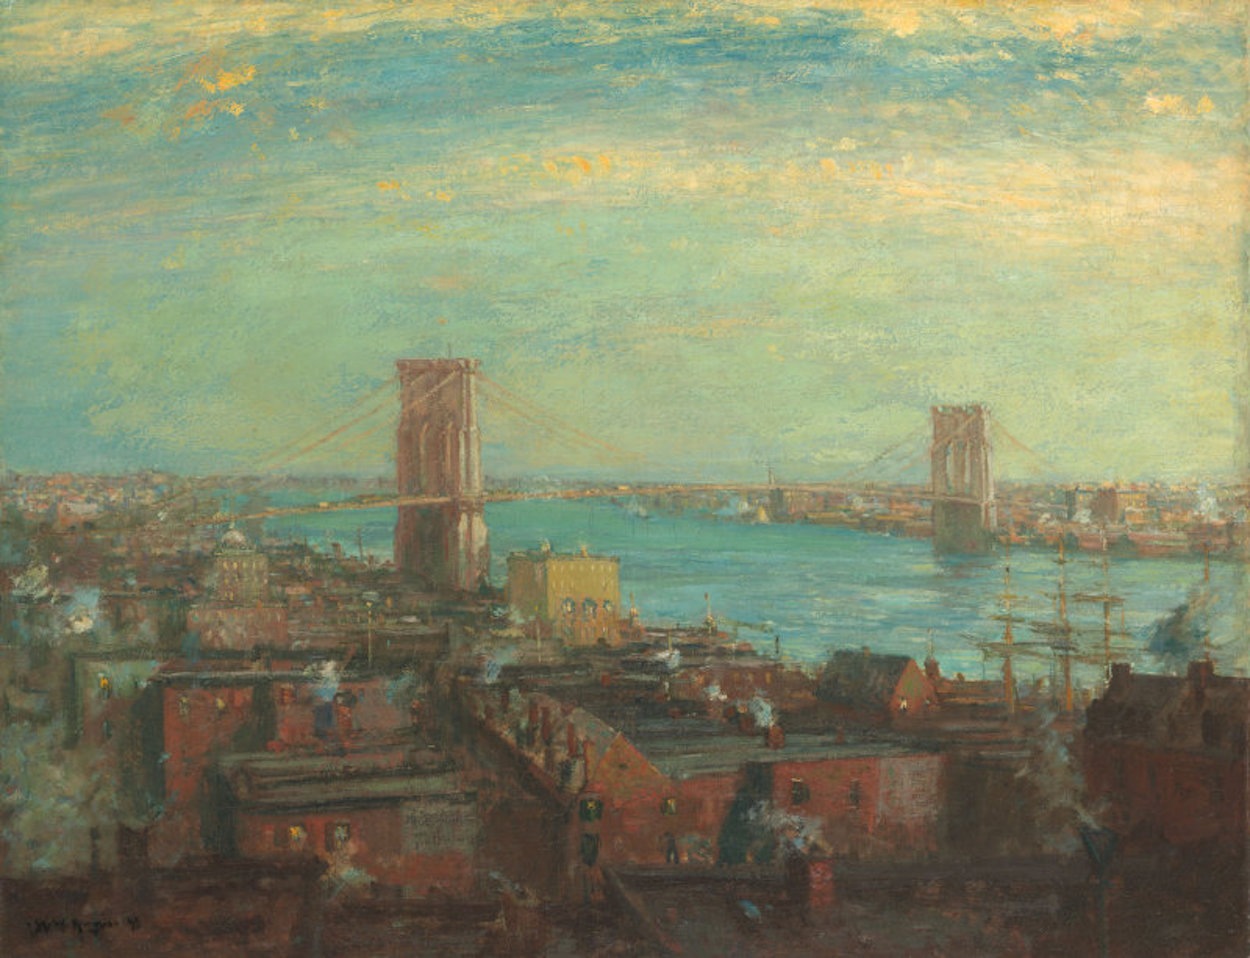 Brooklynský most by Henry Ward Ranger - 1899 - 72,39 x 91,75 cm 